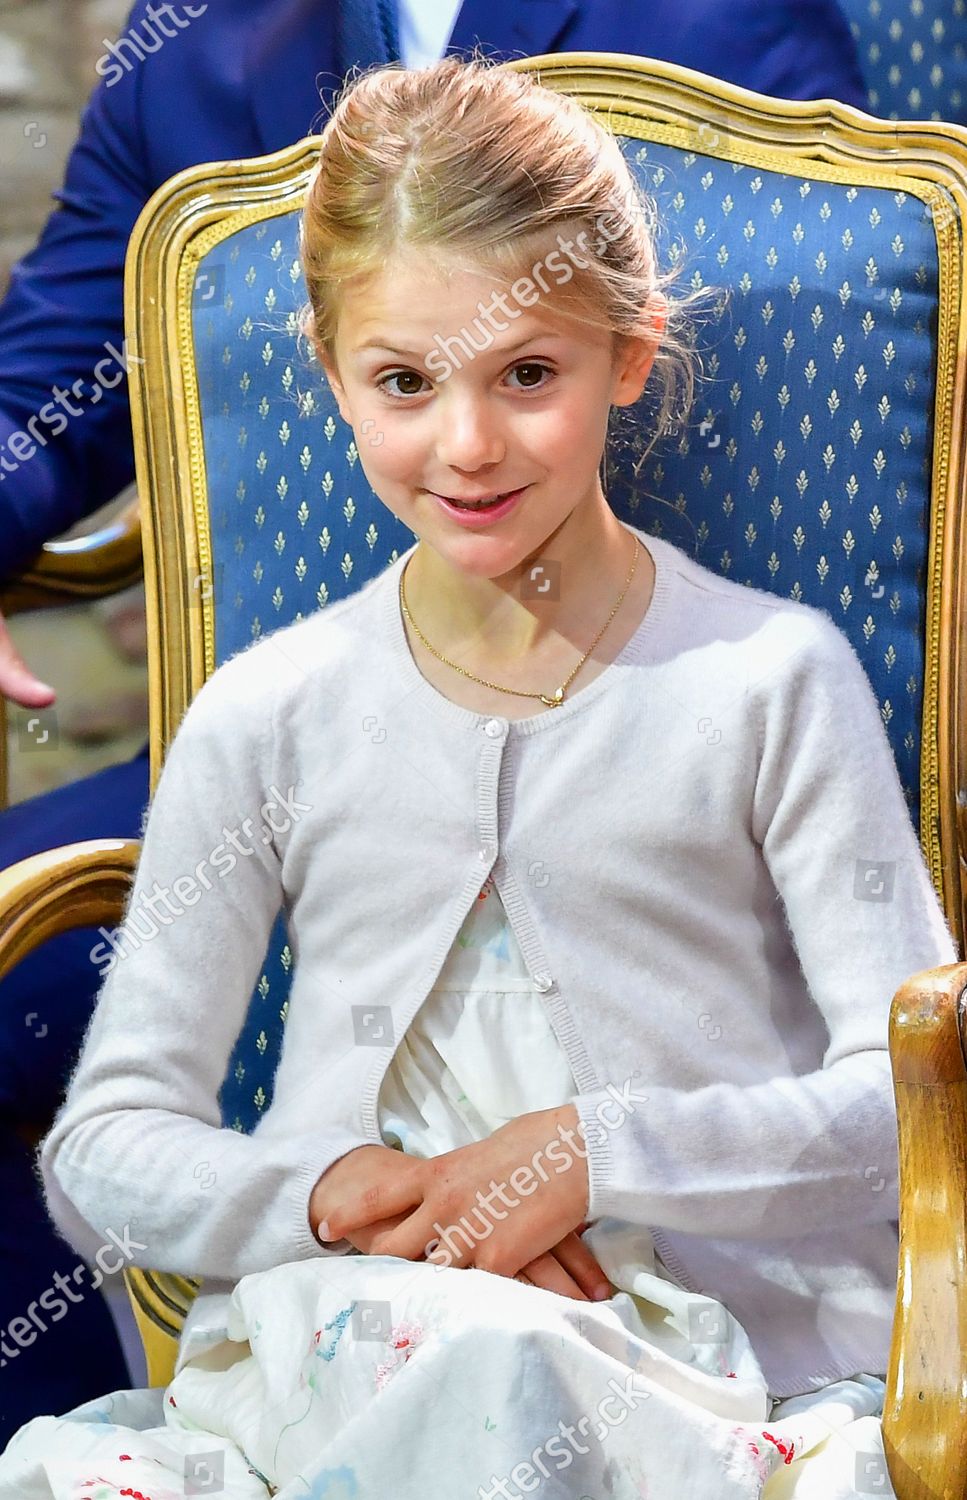 victoria-crown-princess-of-sweden-birthday-celebrations-solliden-palace-borgholm-sweden-shutterstock-editorial-10711483bc.jpg